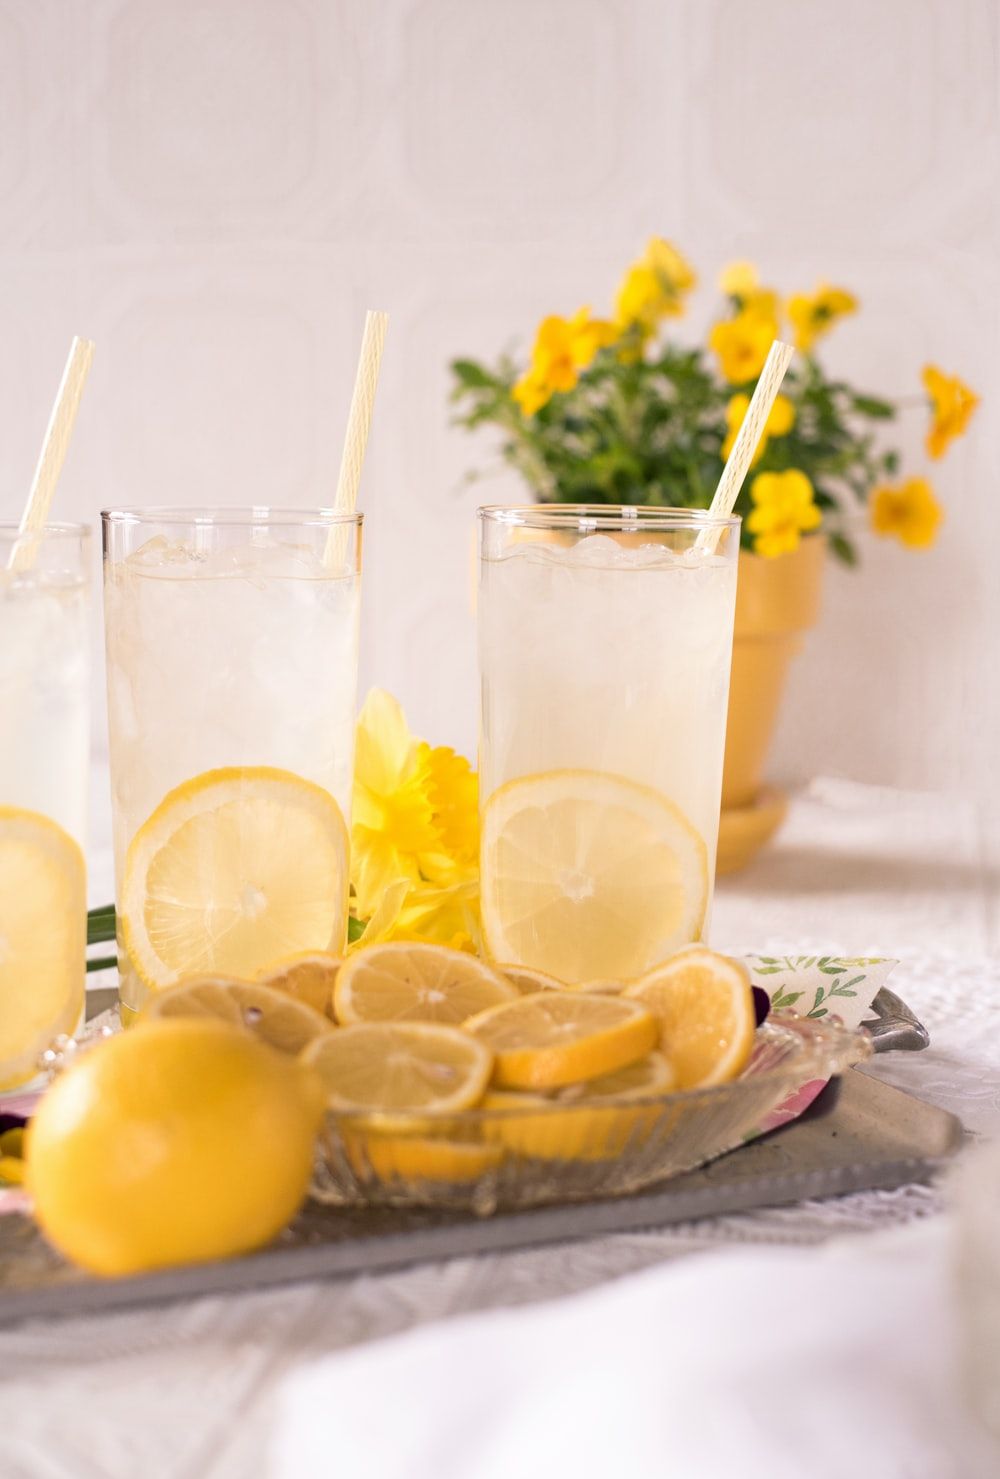 Lemonade Picture. Download Free Image